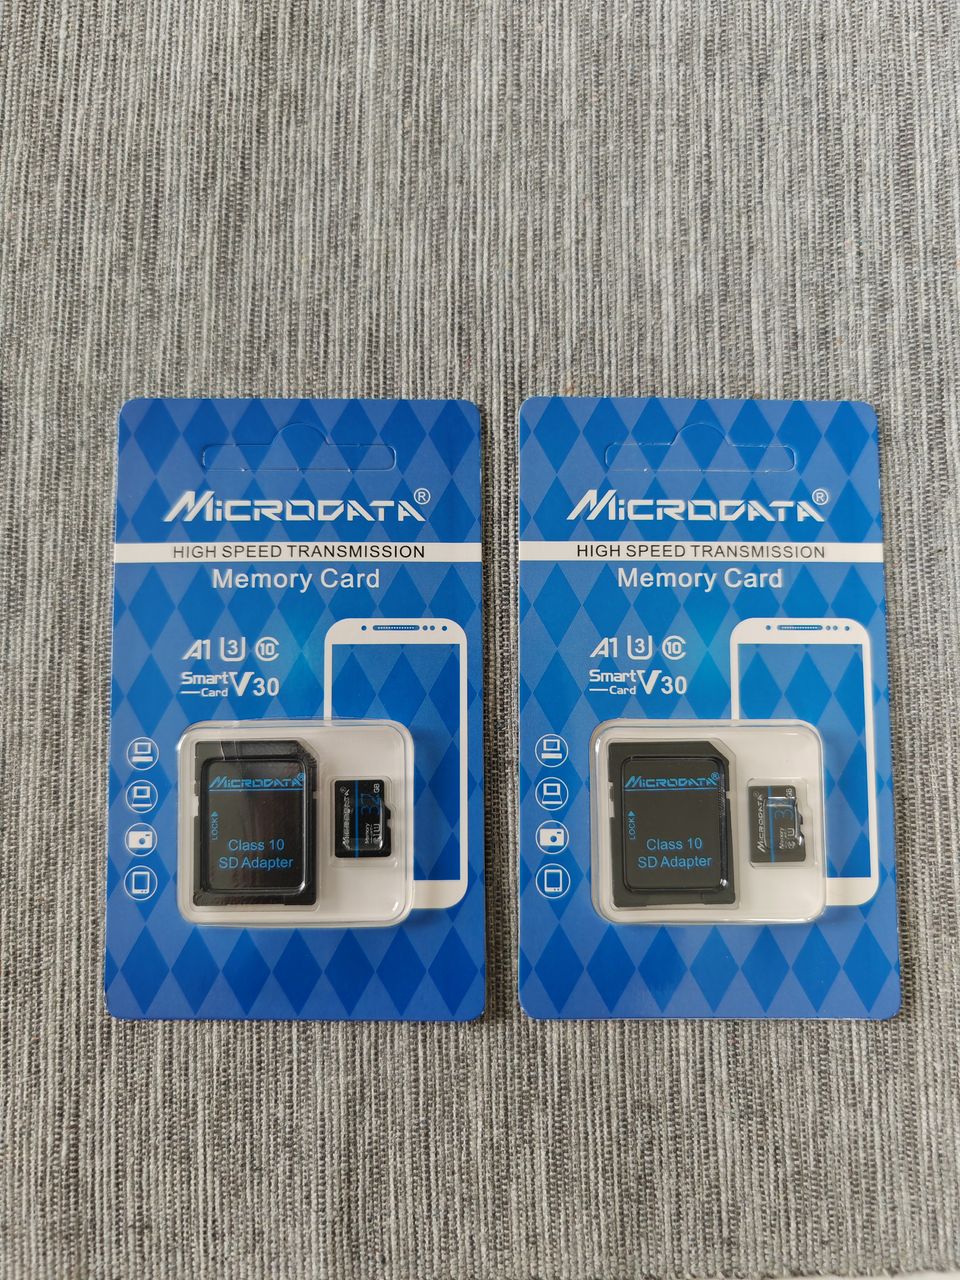 Uudet Microdata micro sd muistikortit 32GB 2 kpl